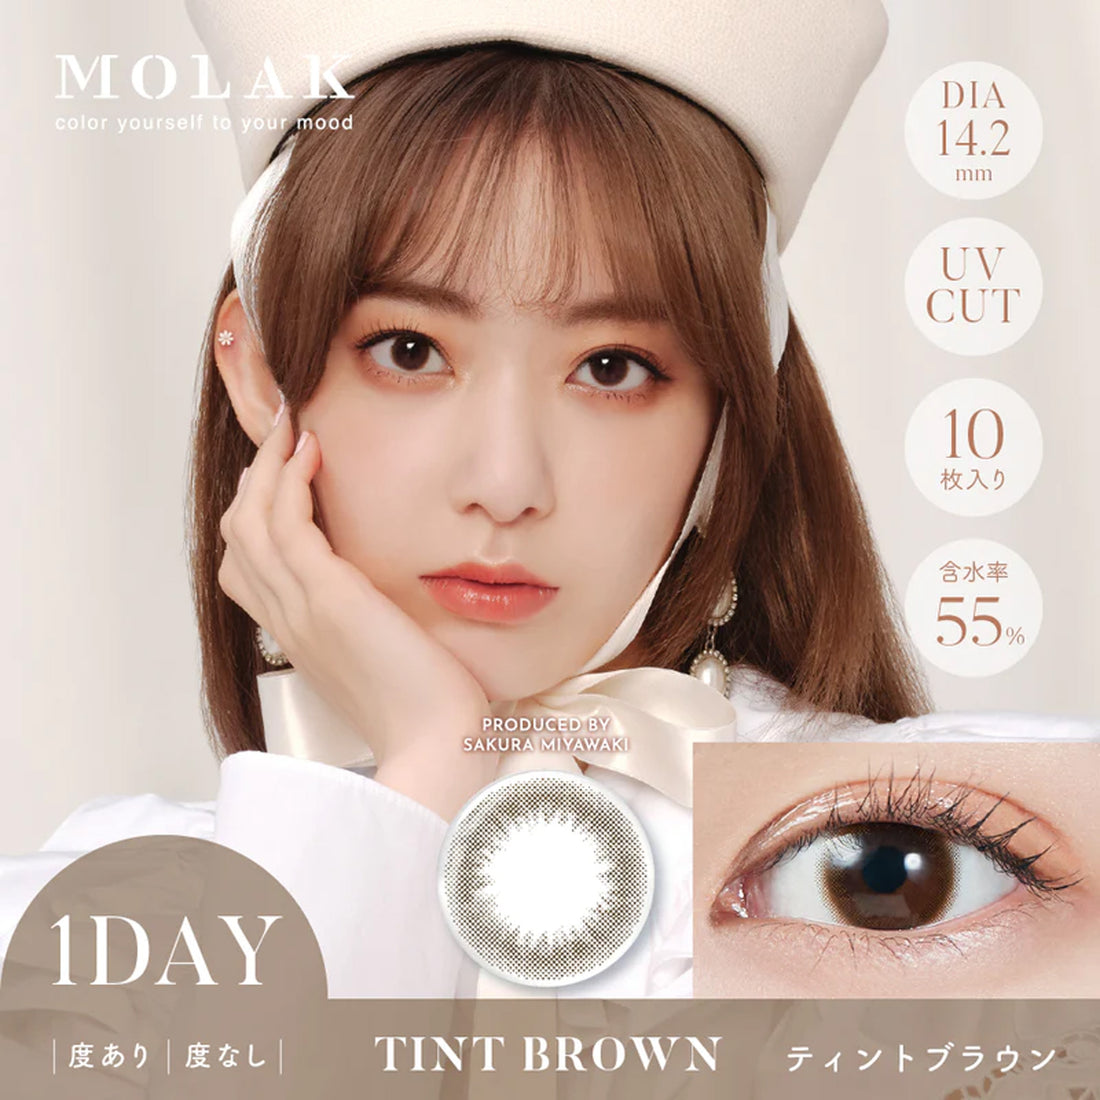 MOLAK 1Day Contact Lenses-Tint Brown 10pcs